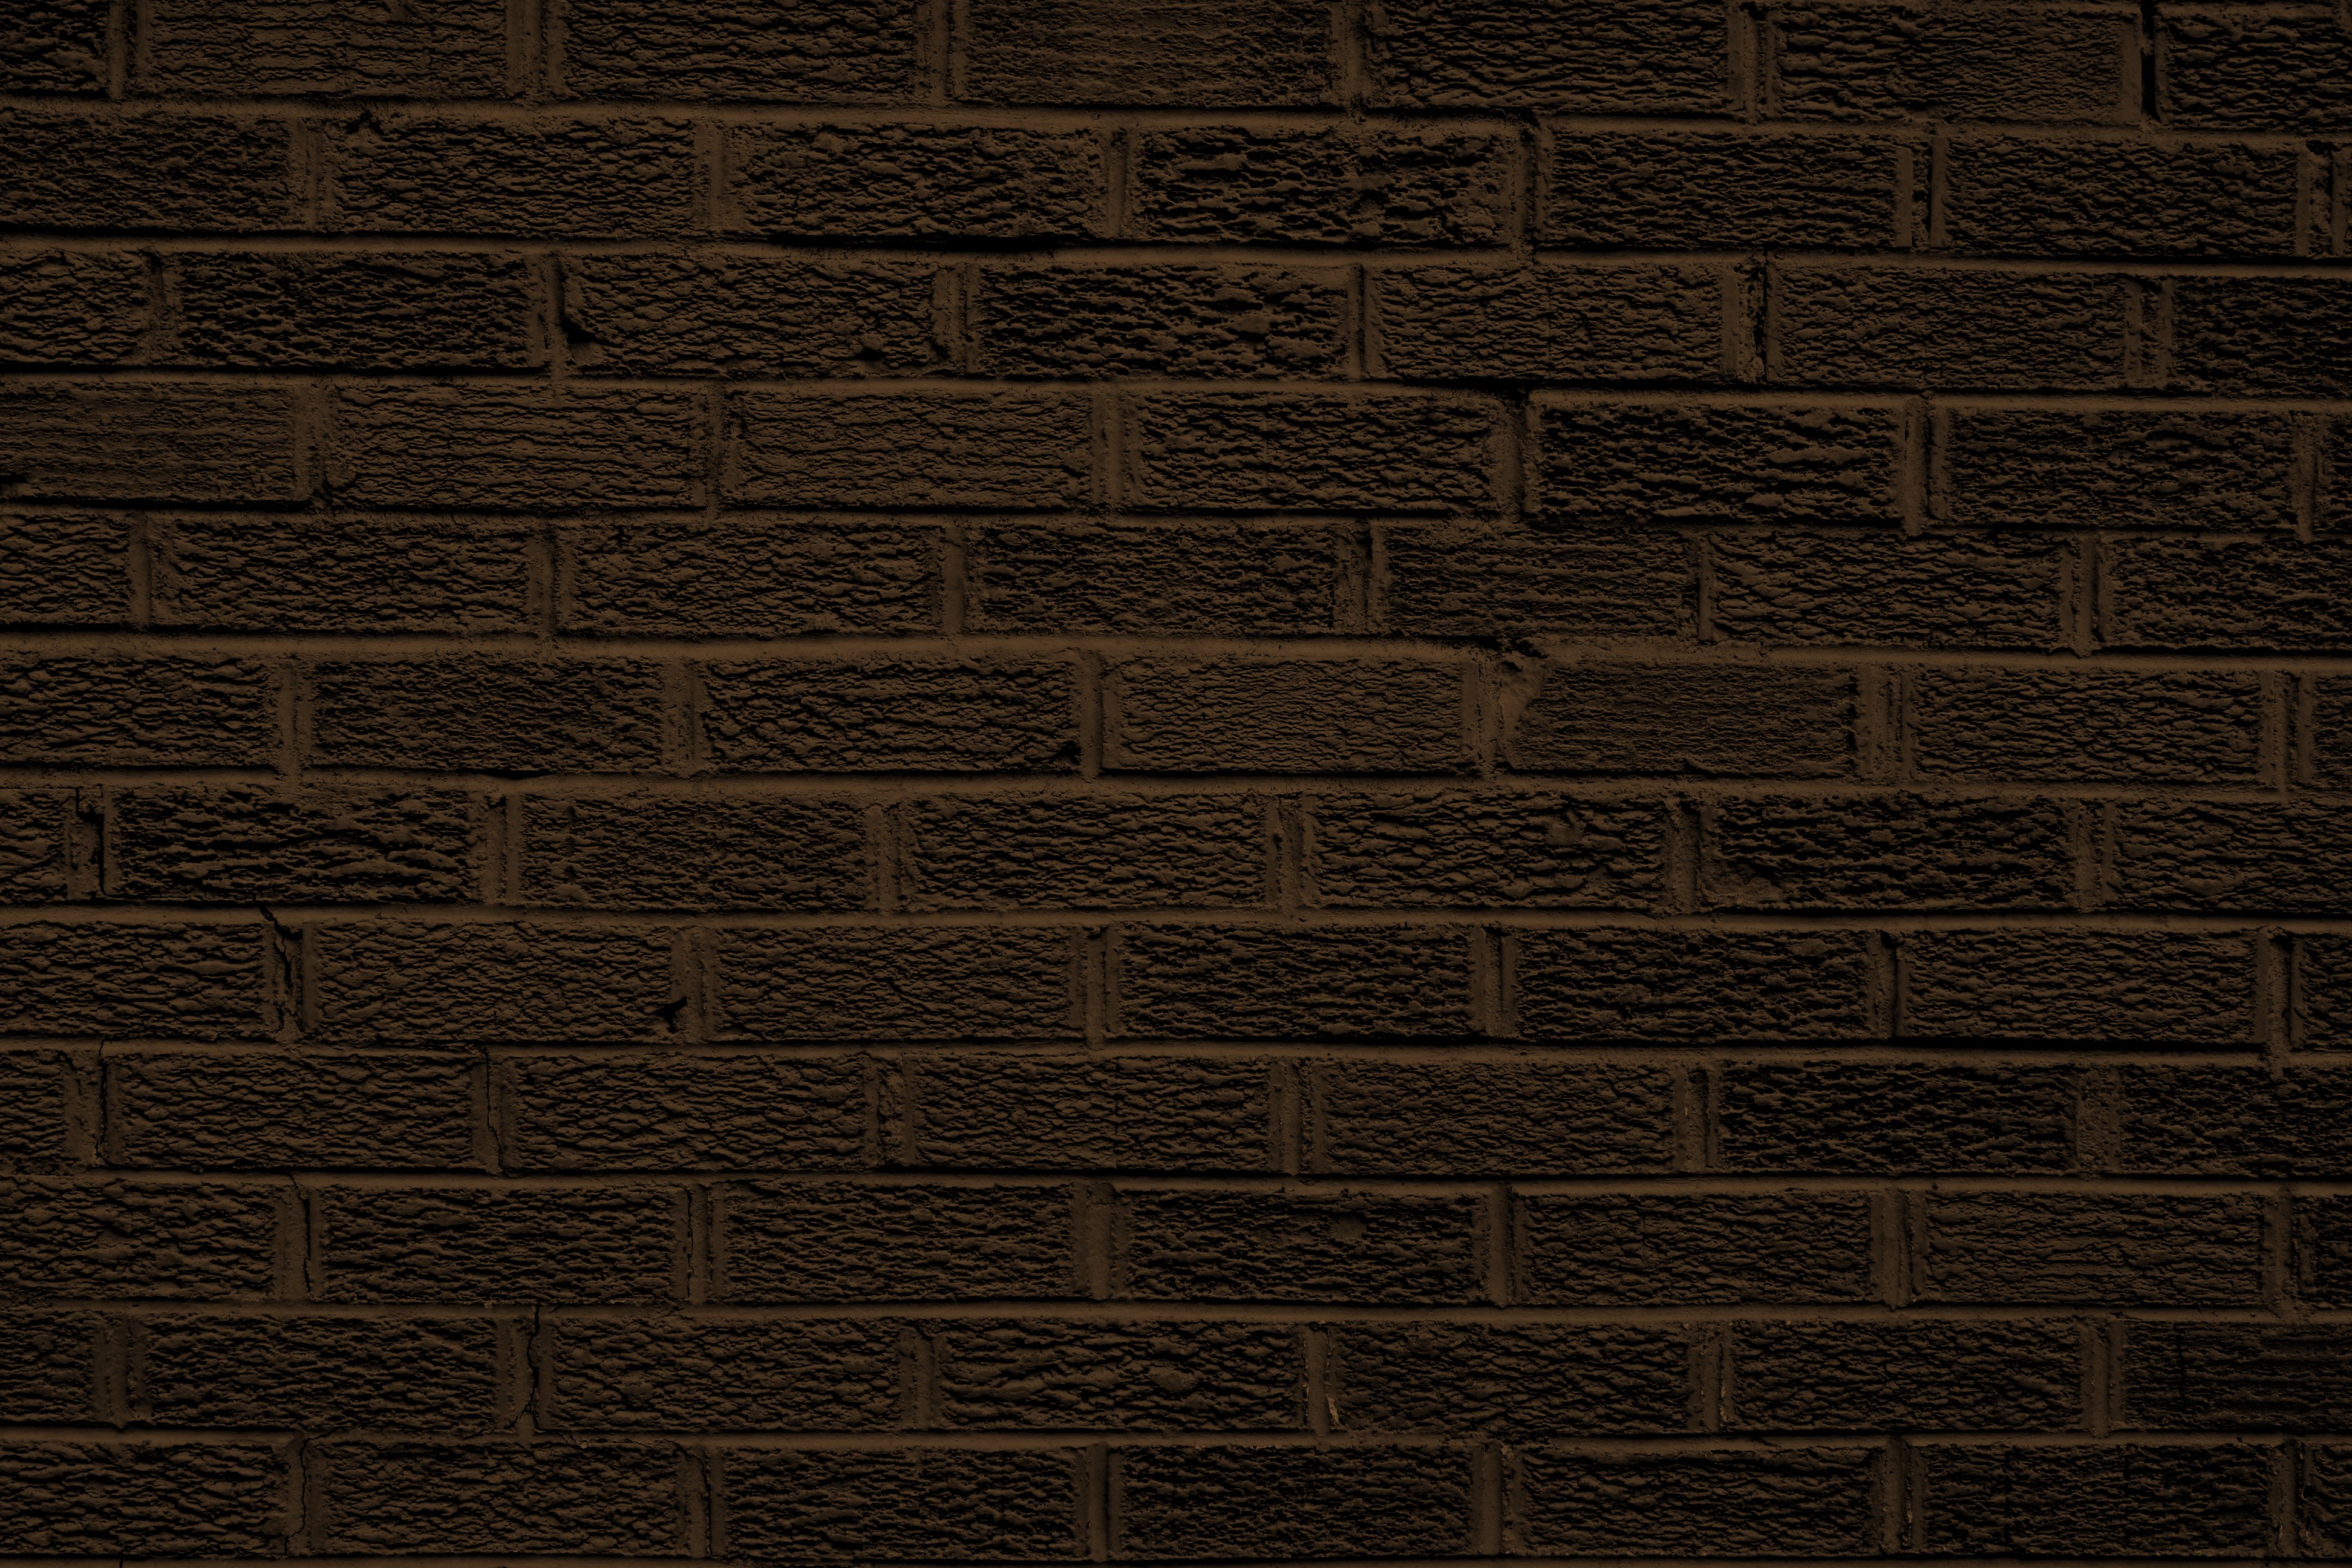 Brown Brick Wall Texture Picture Photograph Photos Public